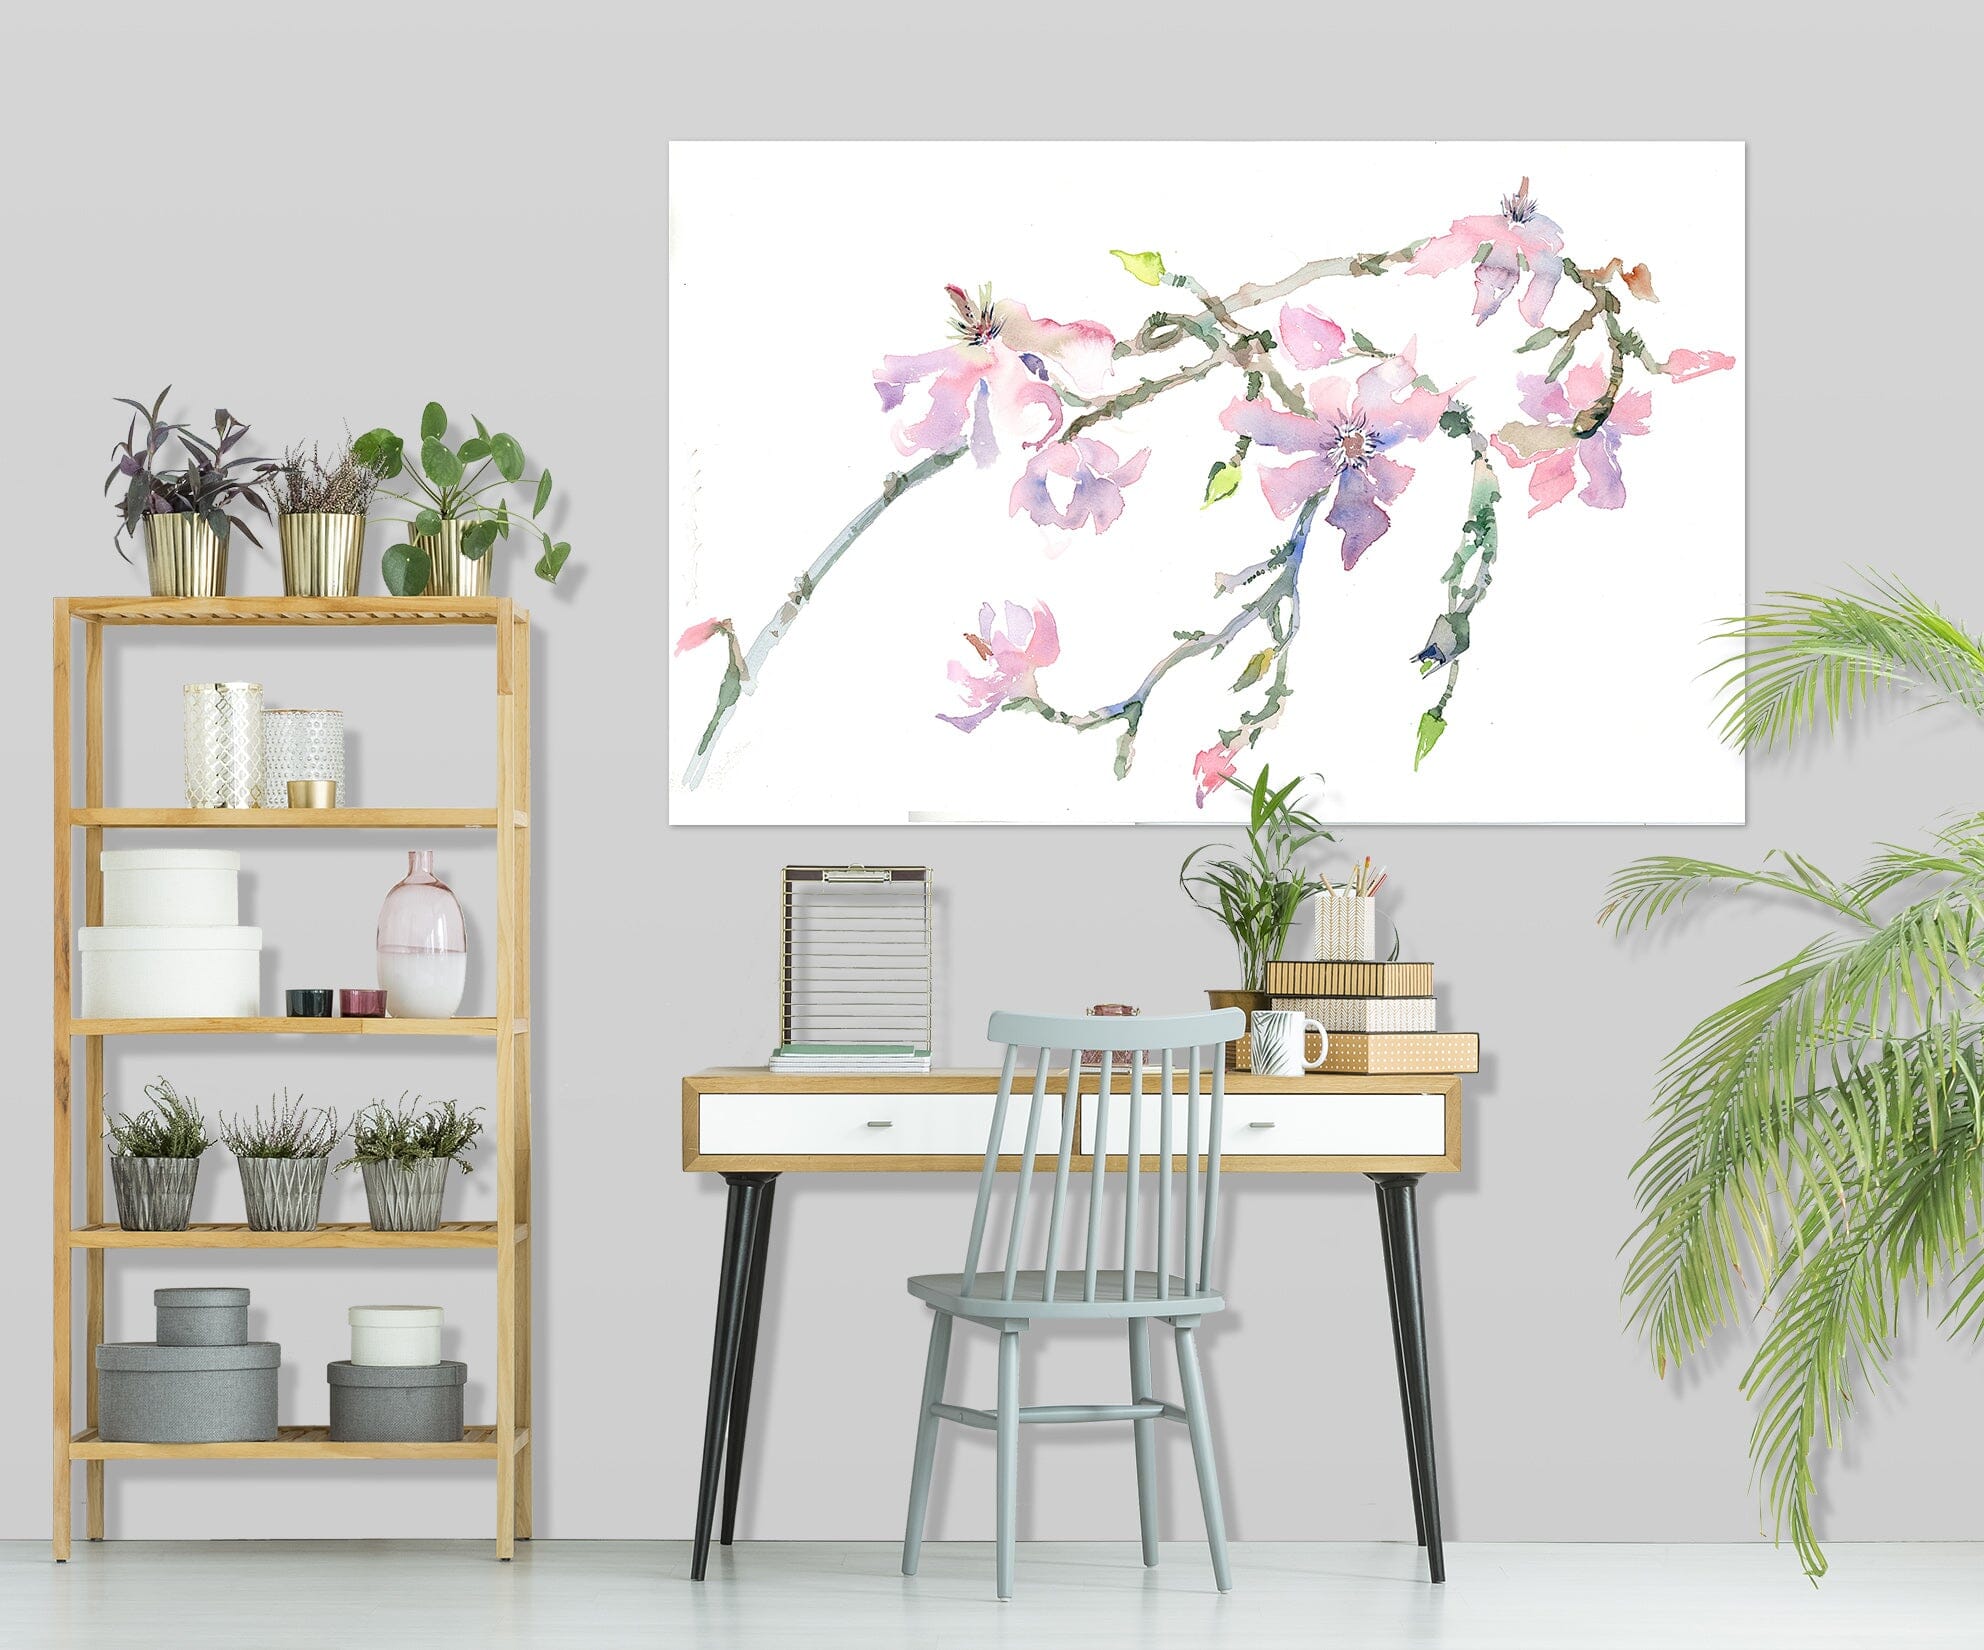 3D Peach Blossom 007 Anne Farrall Doyle Wall Sticker Wallpaper AJ Wallpaper 2 